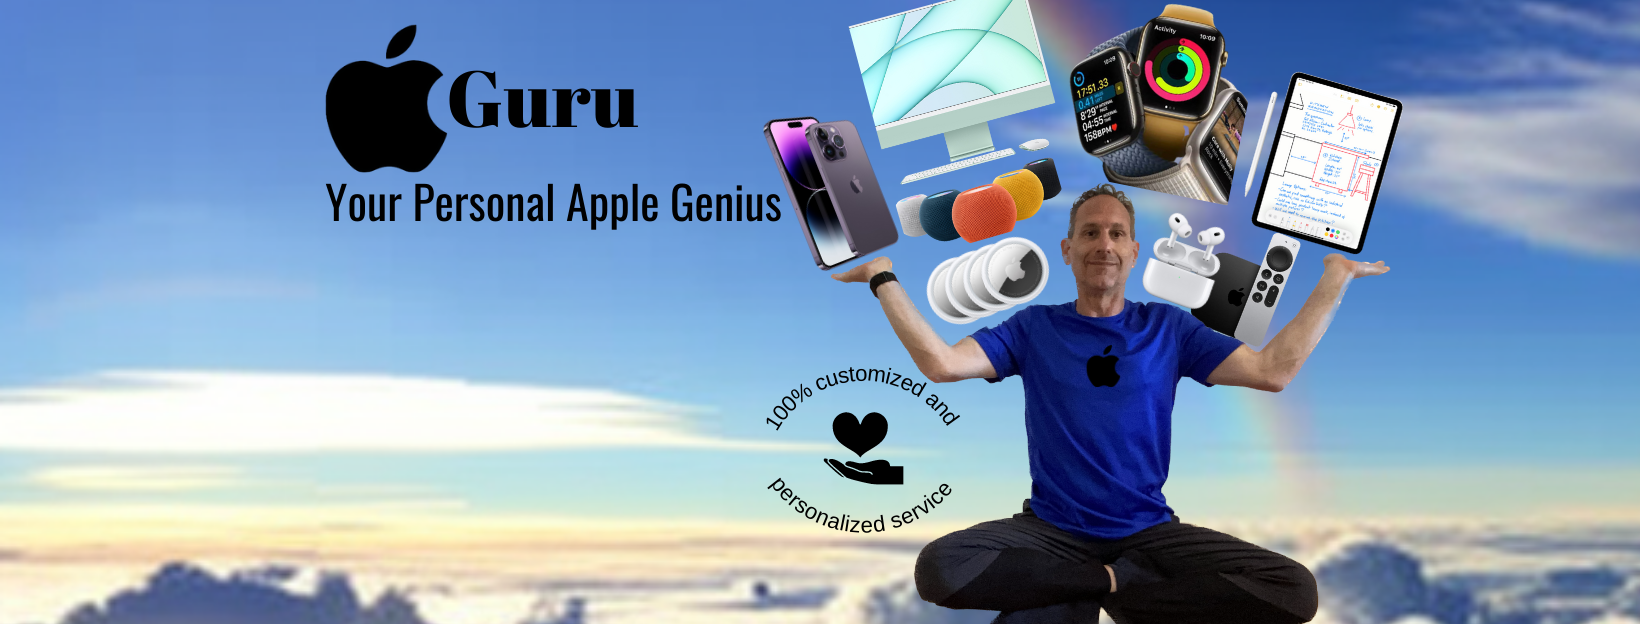 Apple Guru